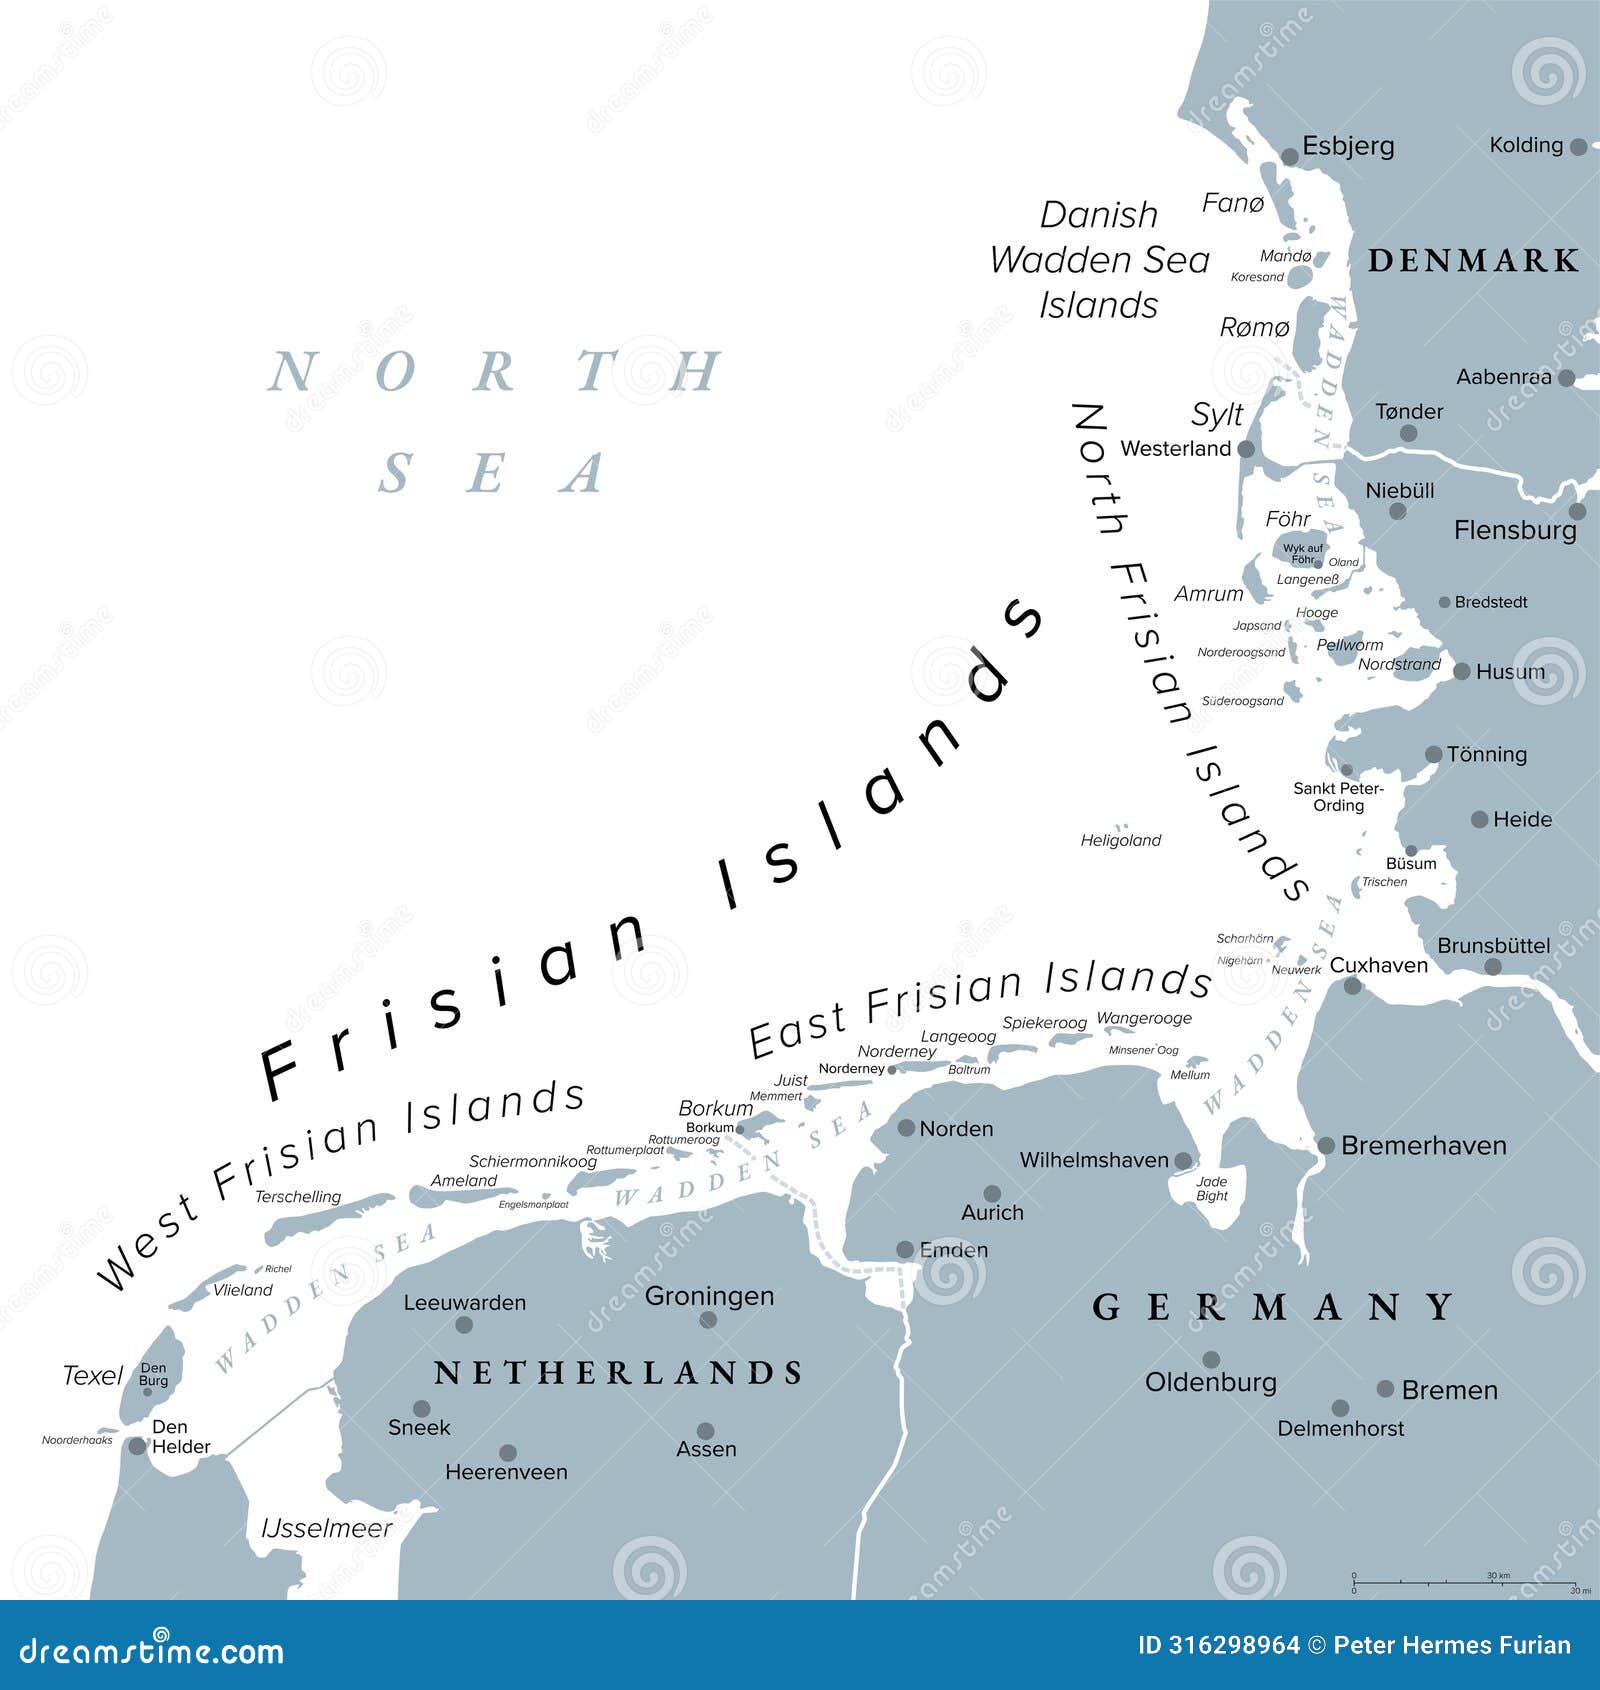 frisian islands, wadden sea islands at the north sea, gray political map